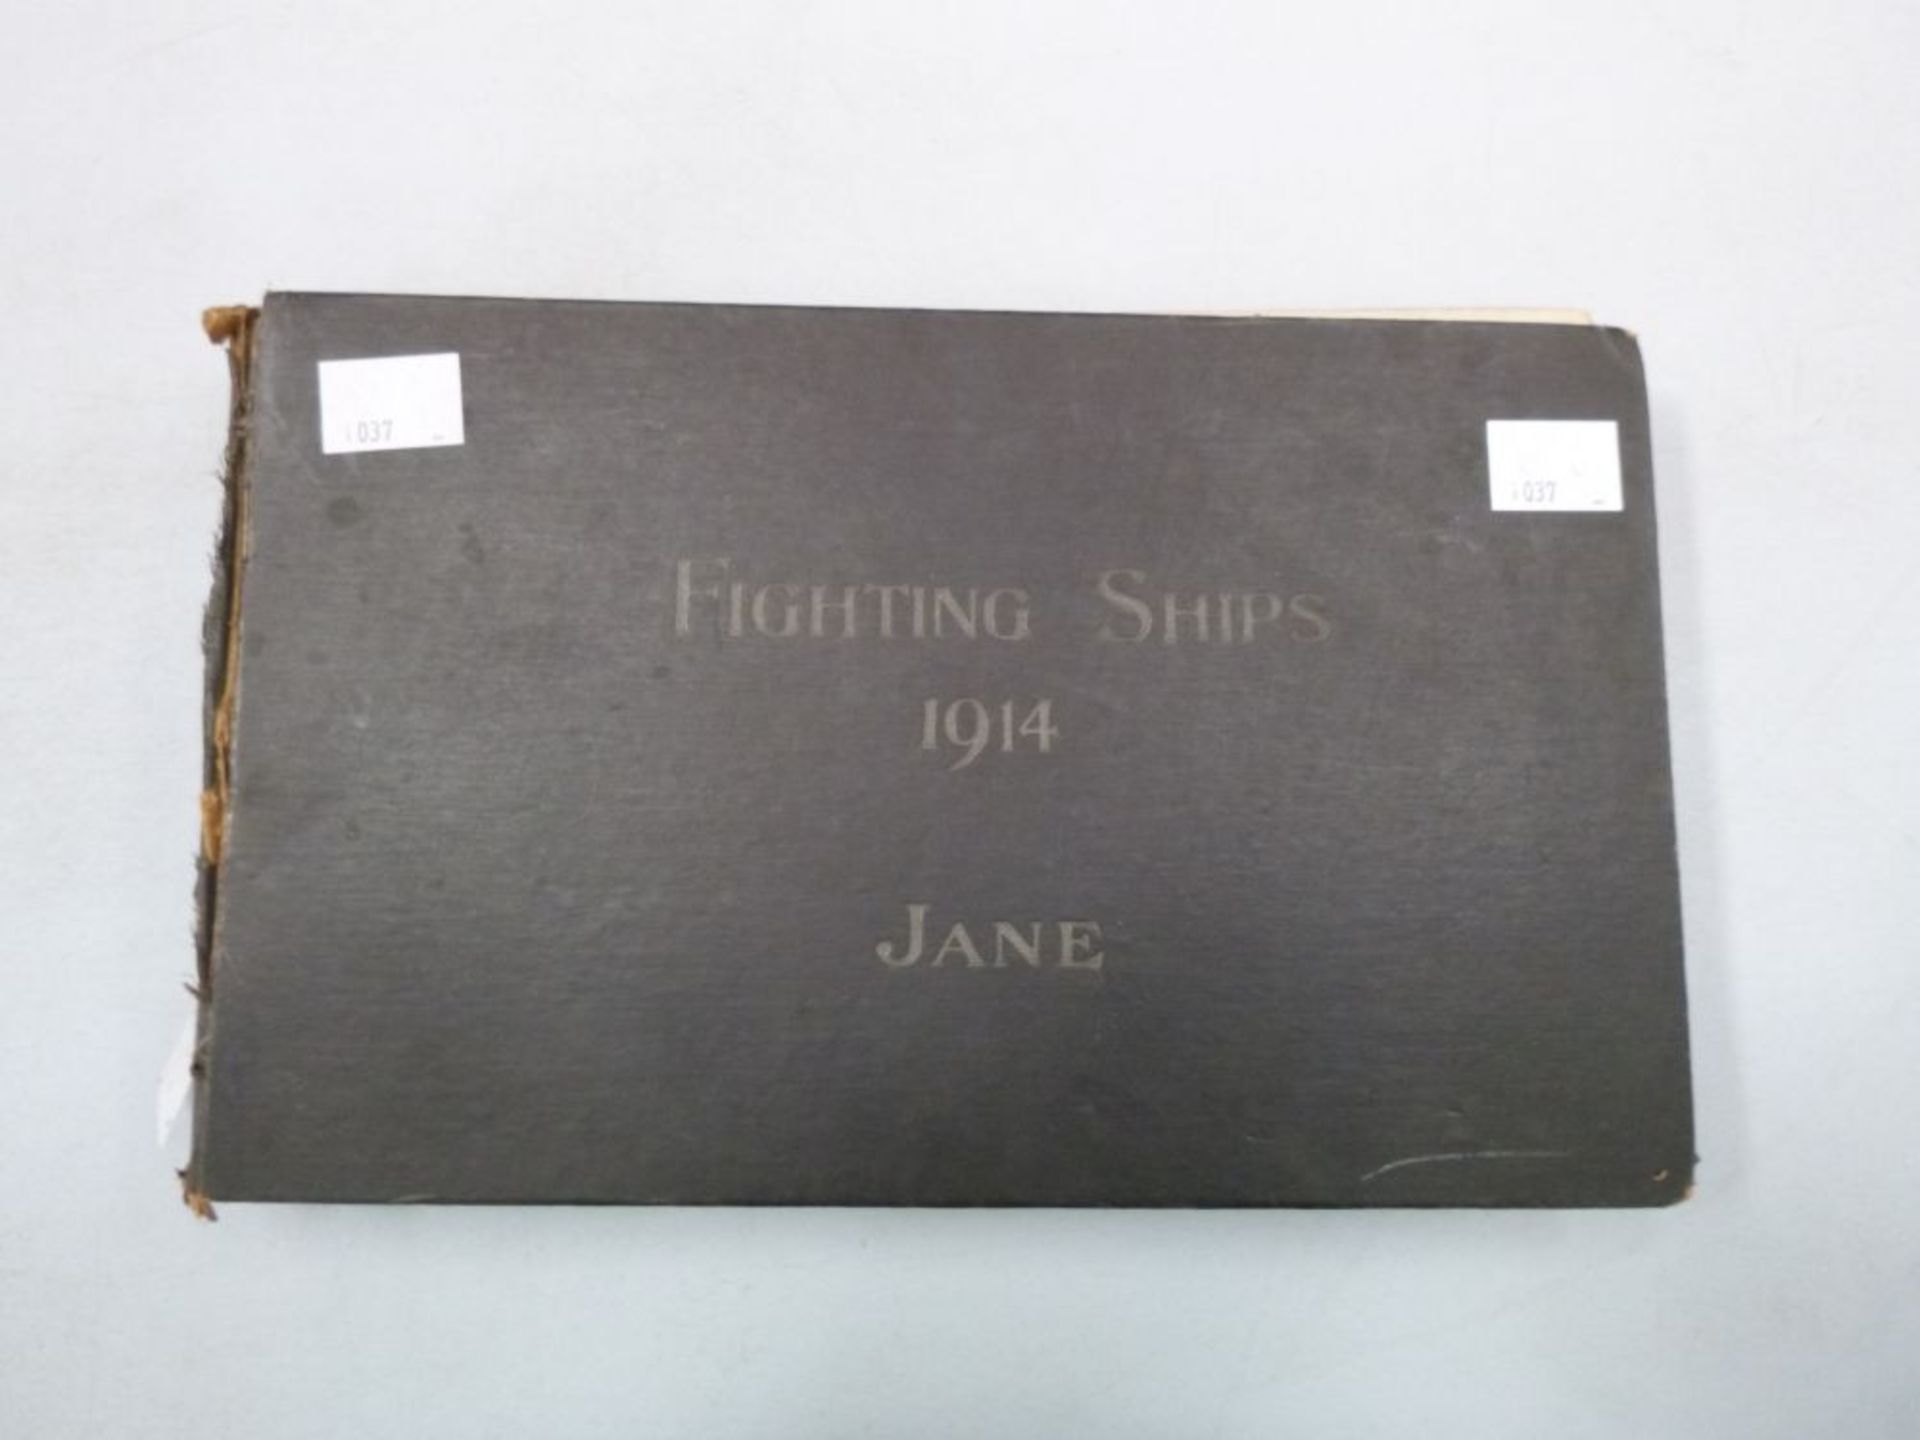 'Jane's Fighting Ships' - one volume 1914 (est. £20-£40)